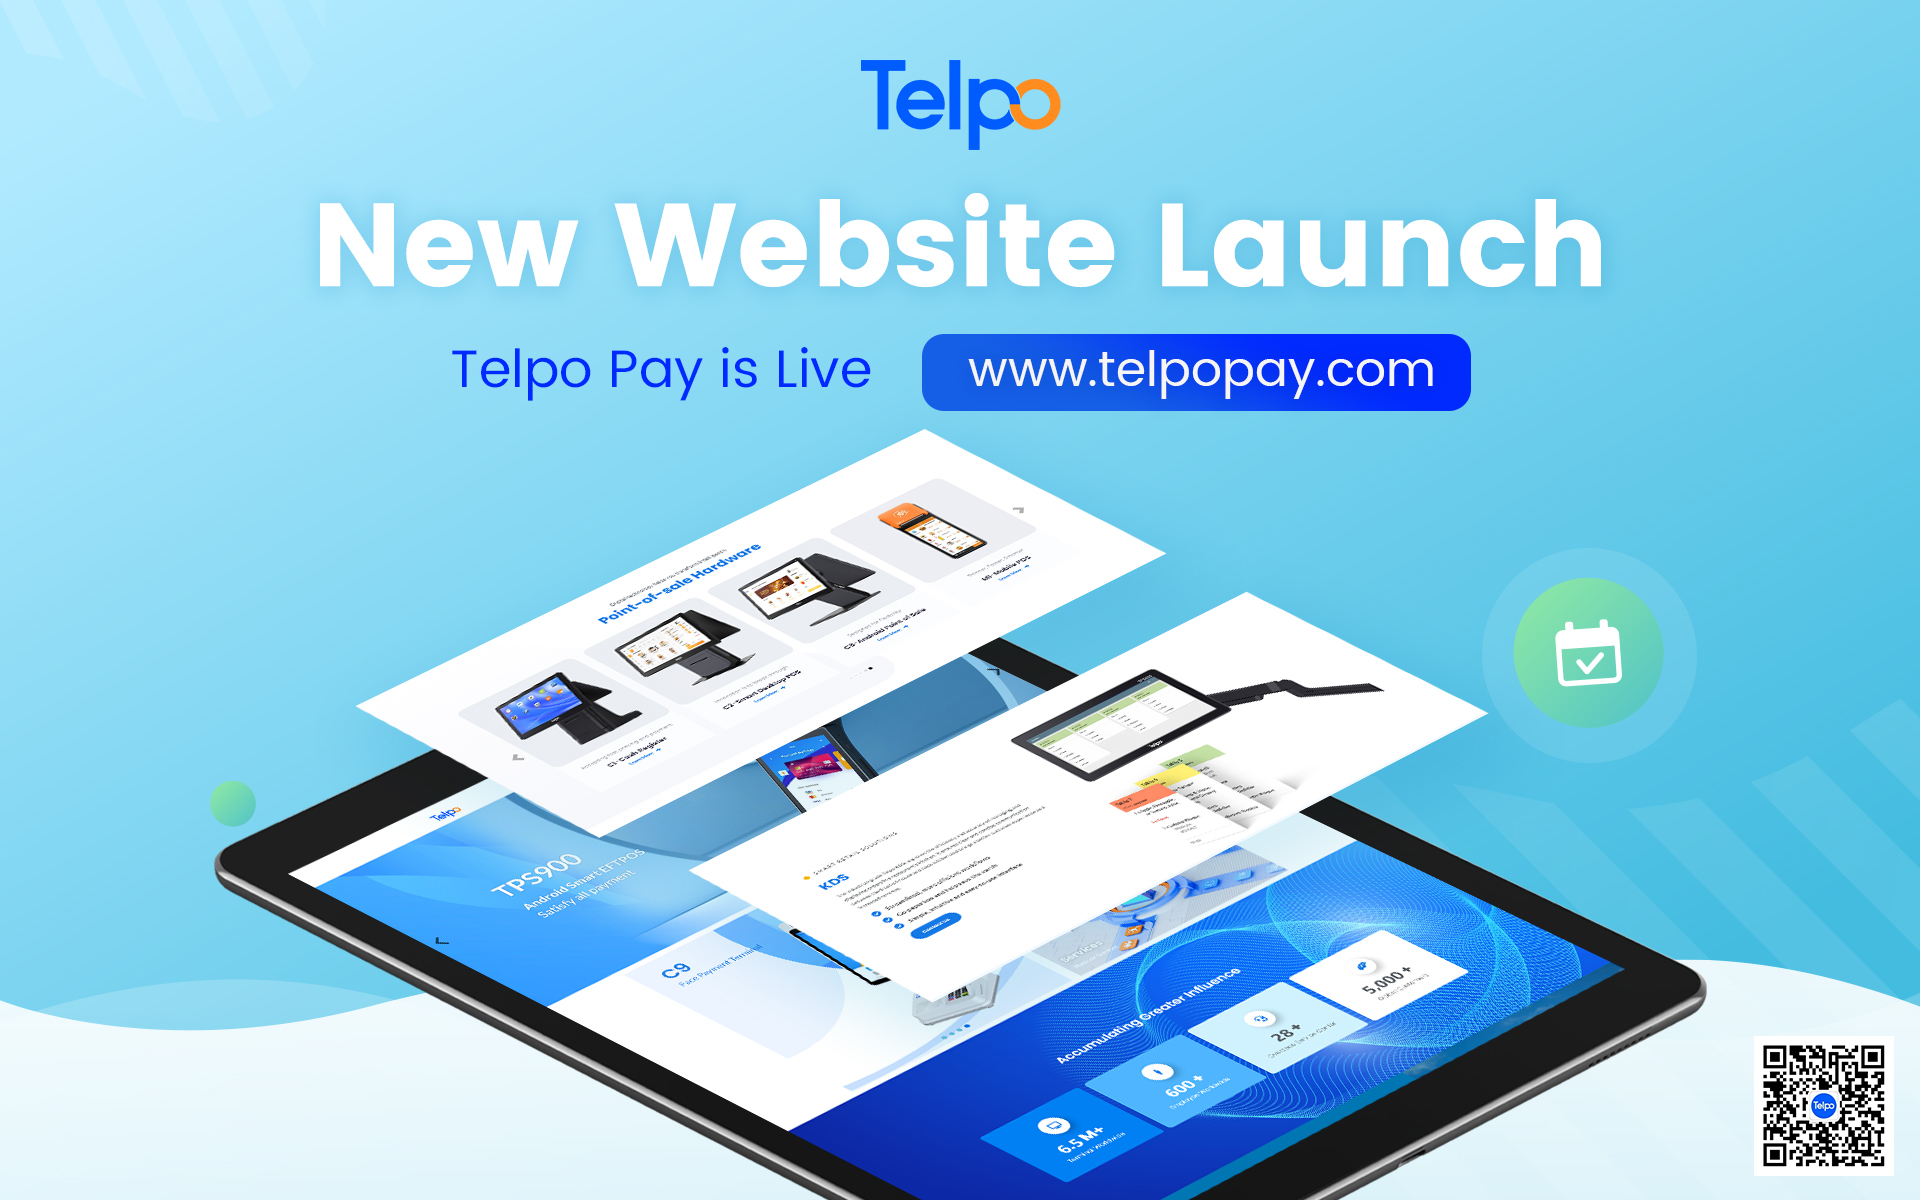 Telpo new website Telpopay